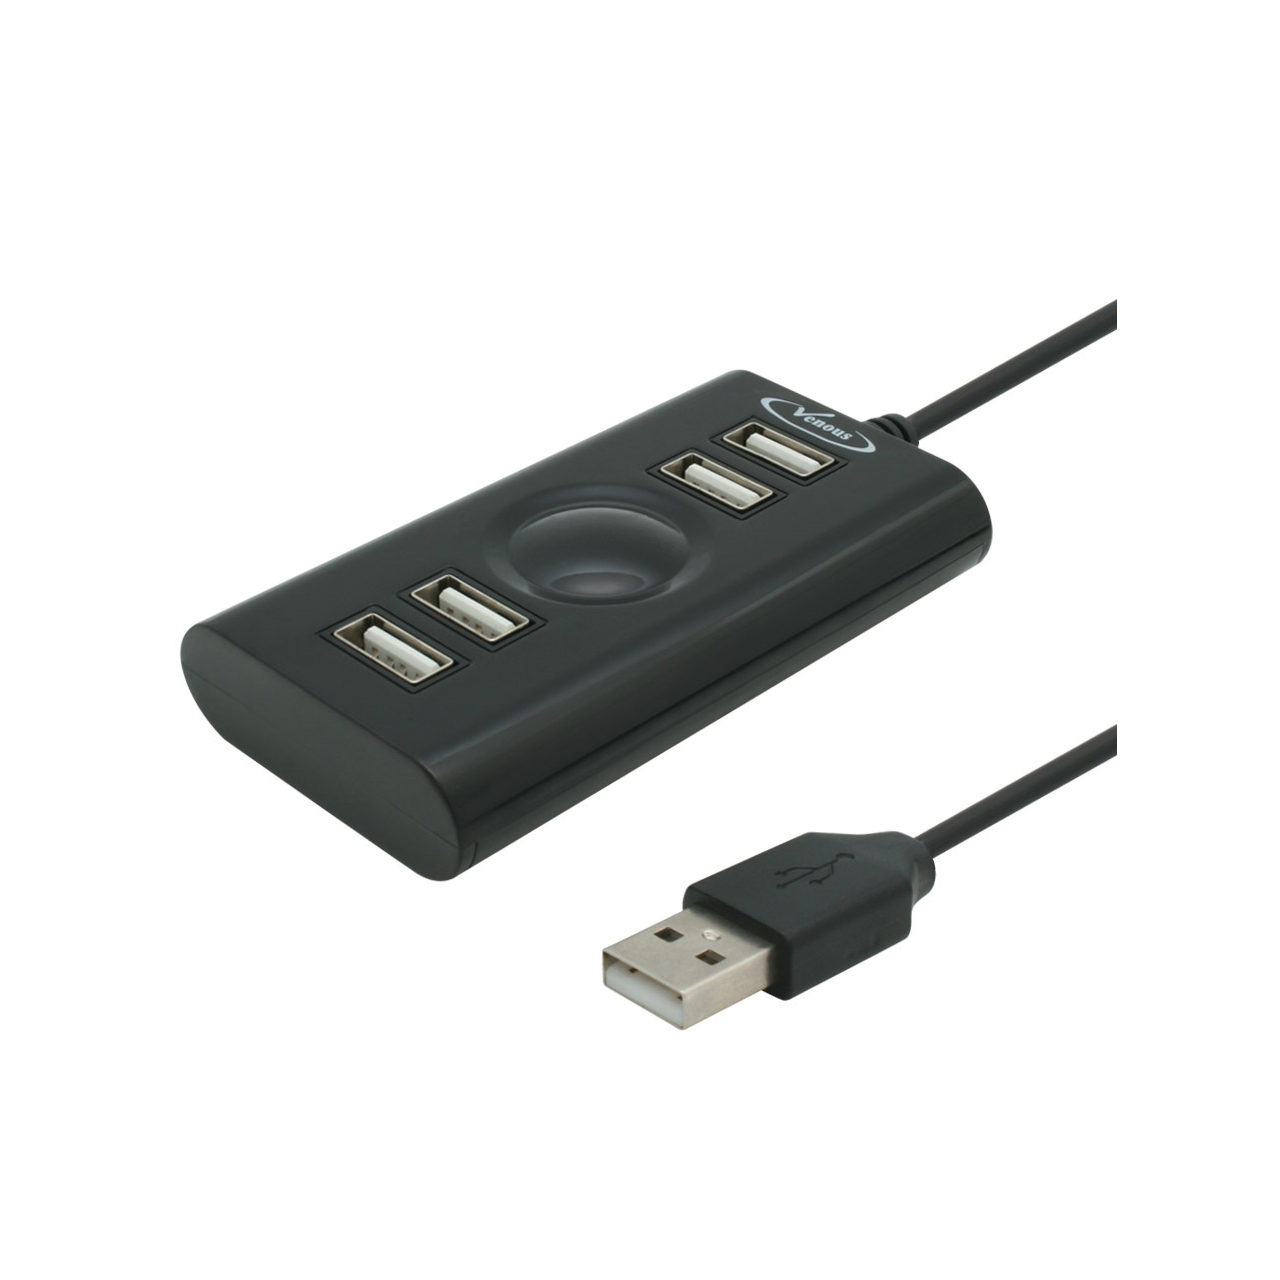 هاب 4 پورت USB 2.0 ونوس مدل PV-H191